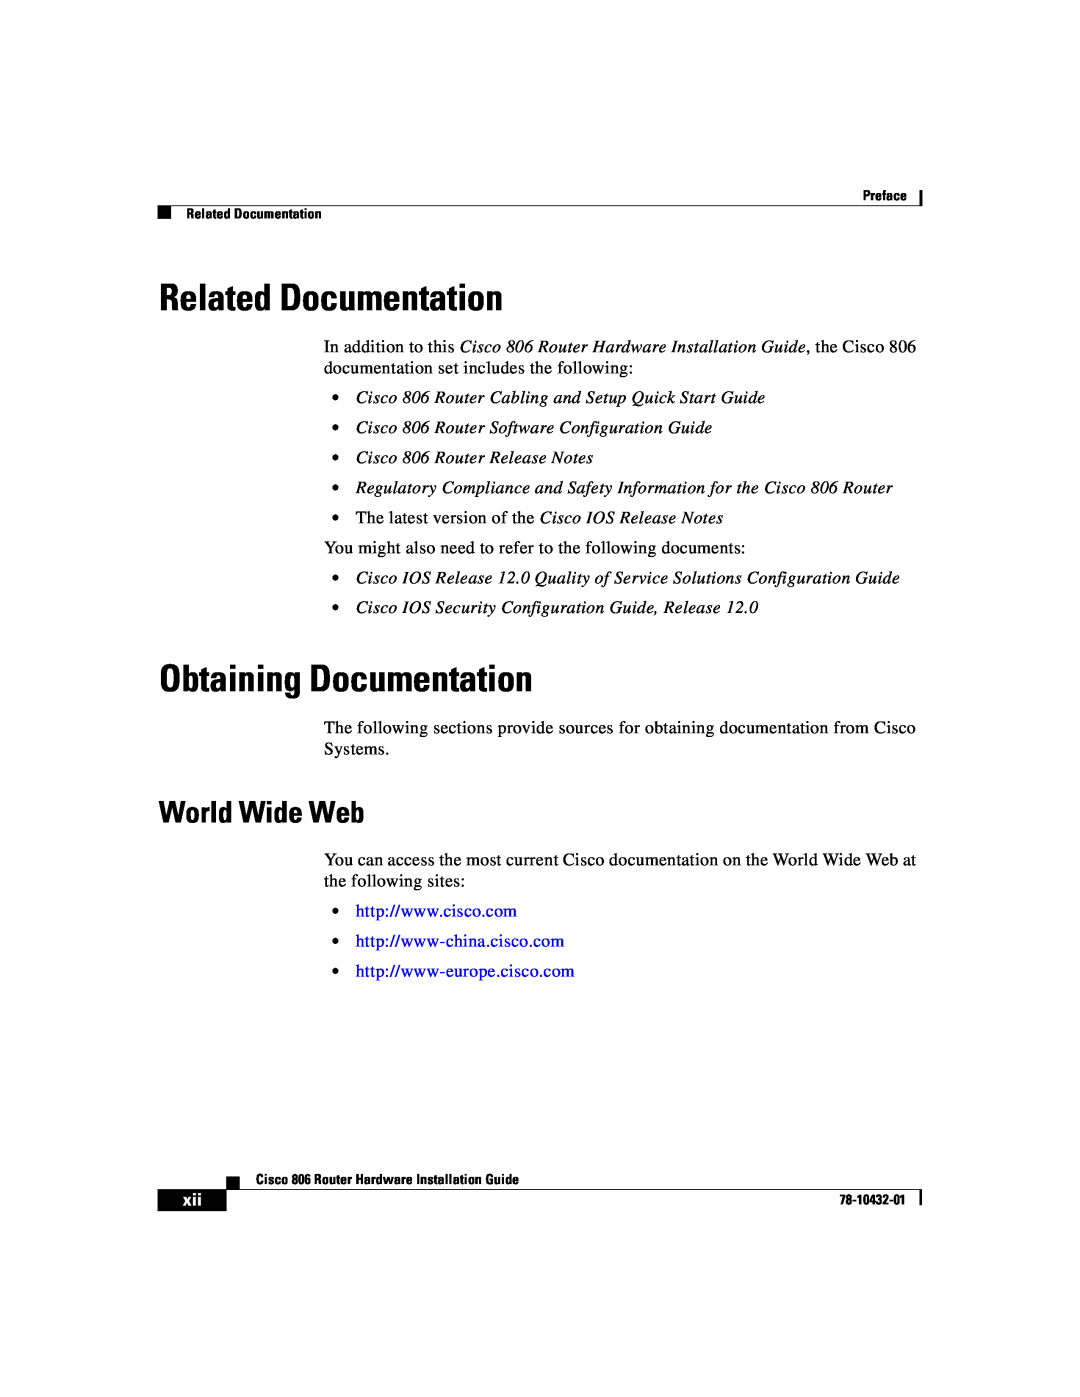 Cisco Systems 806 manual Related Documentation, Obtaining Documentation, World Wide Web 